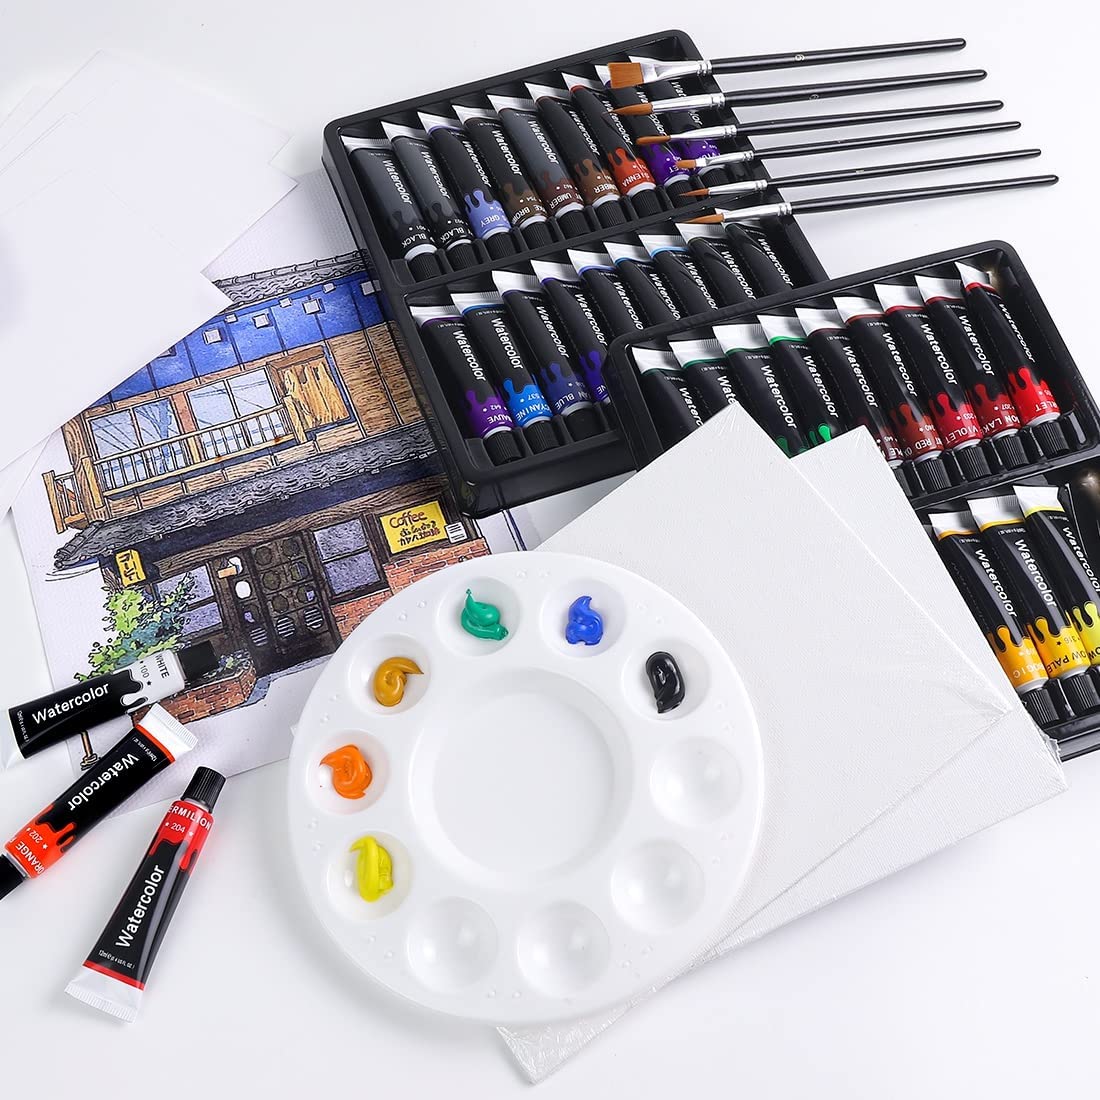 Watercolor Paint Set (36 Colors, 12 ml Tubes, 0.4 oz.) - Chalkola Art Supply